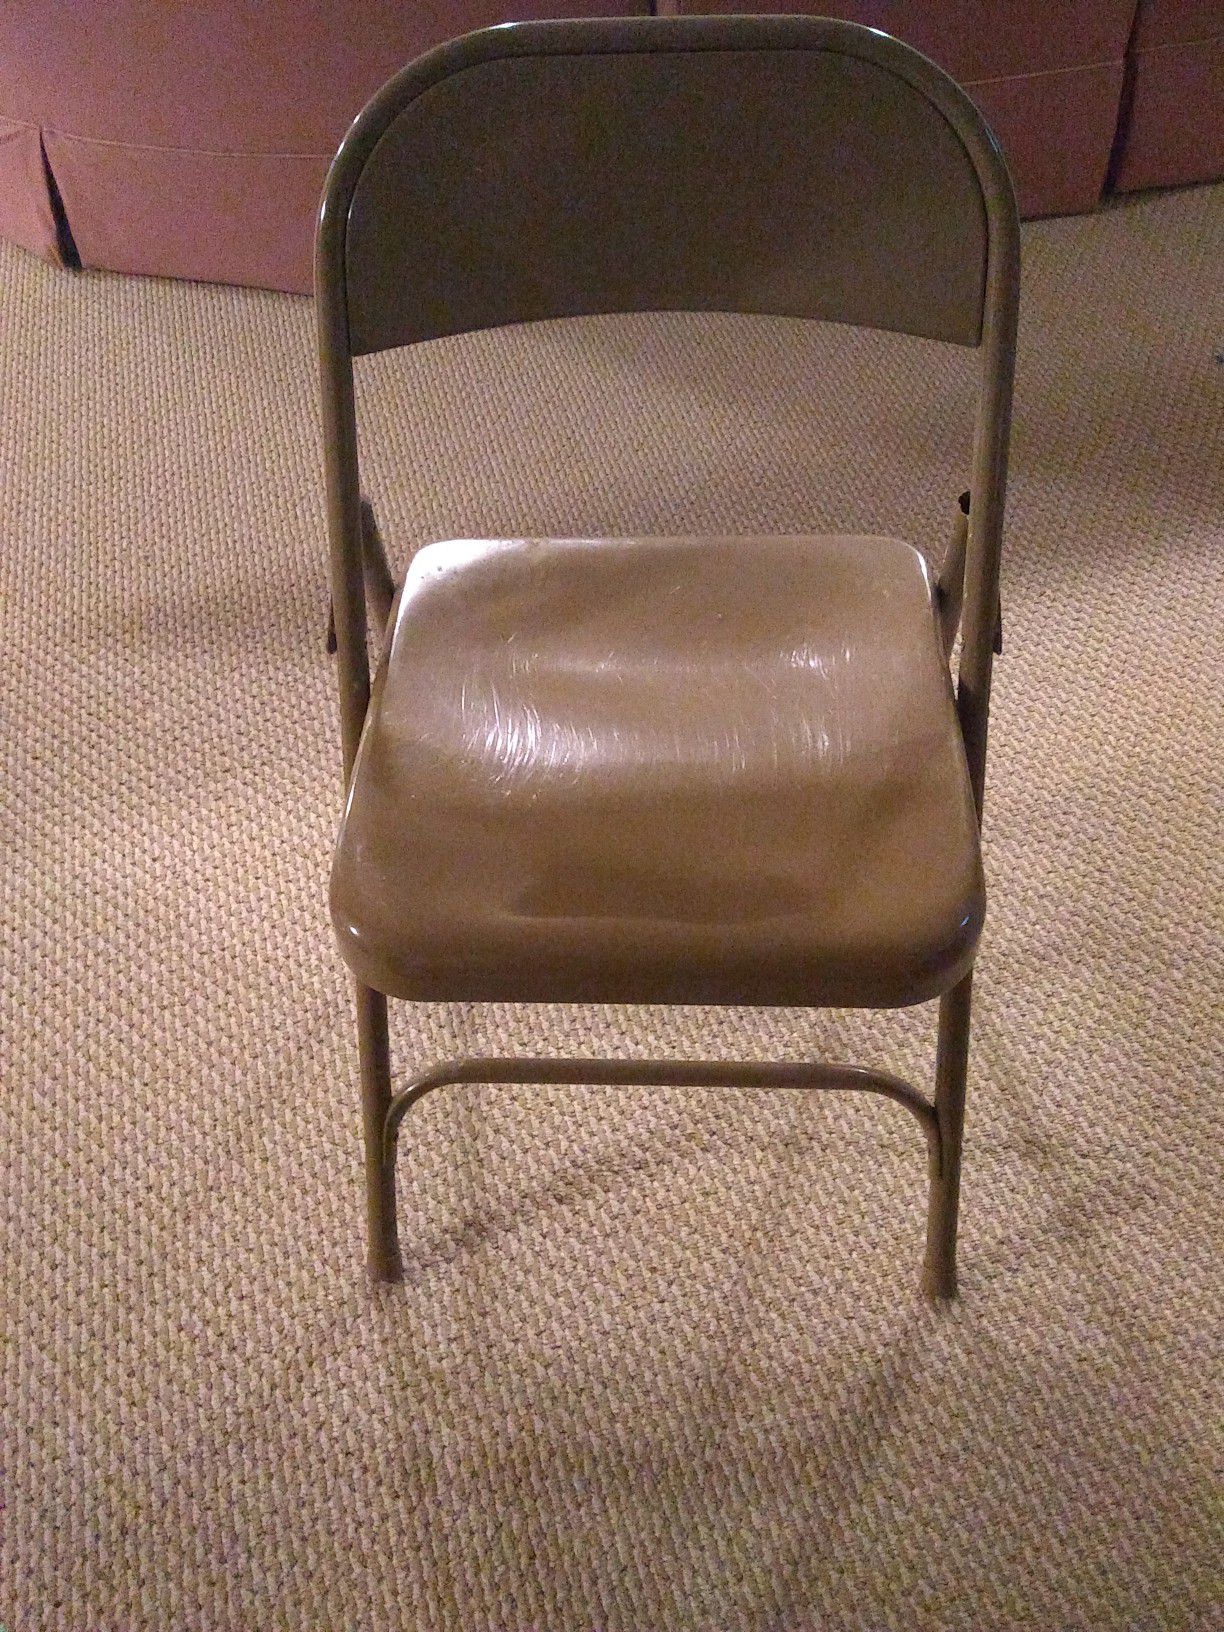 Folding metal chairs